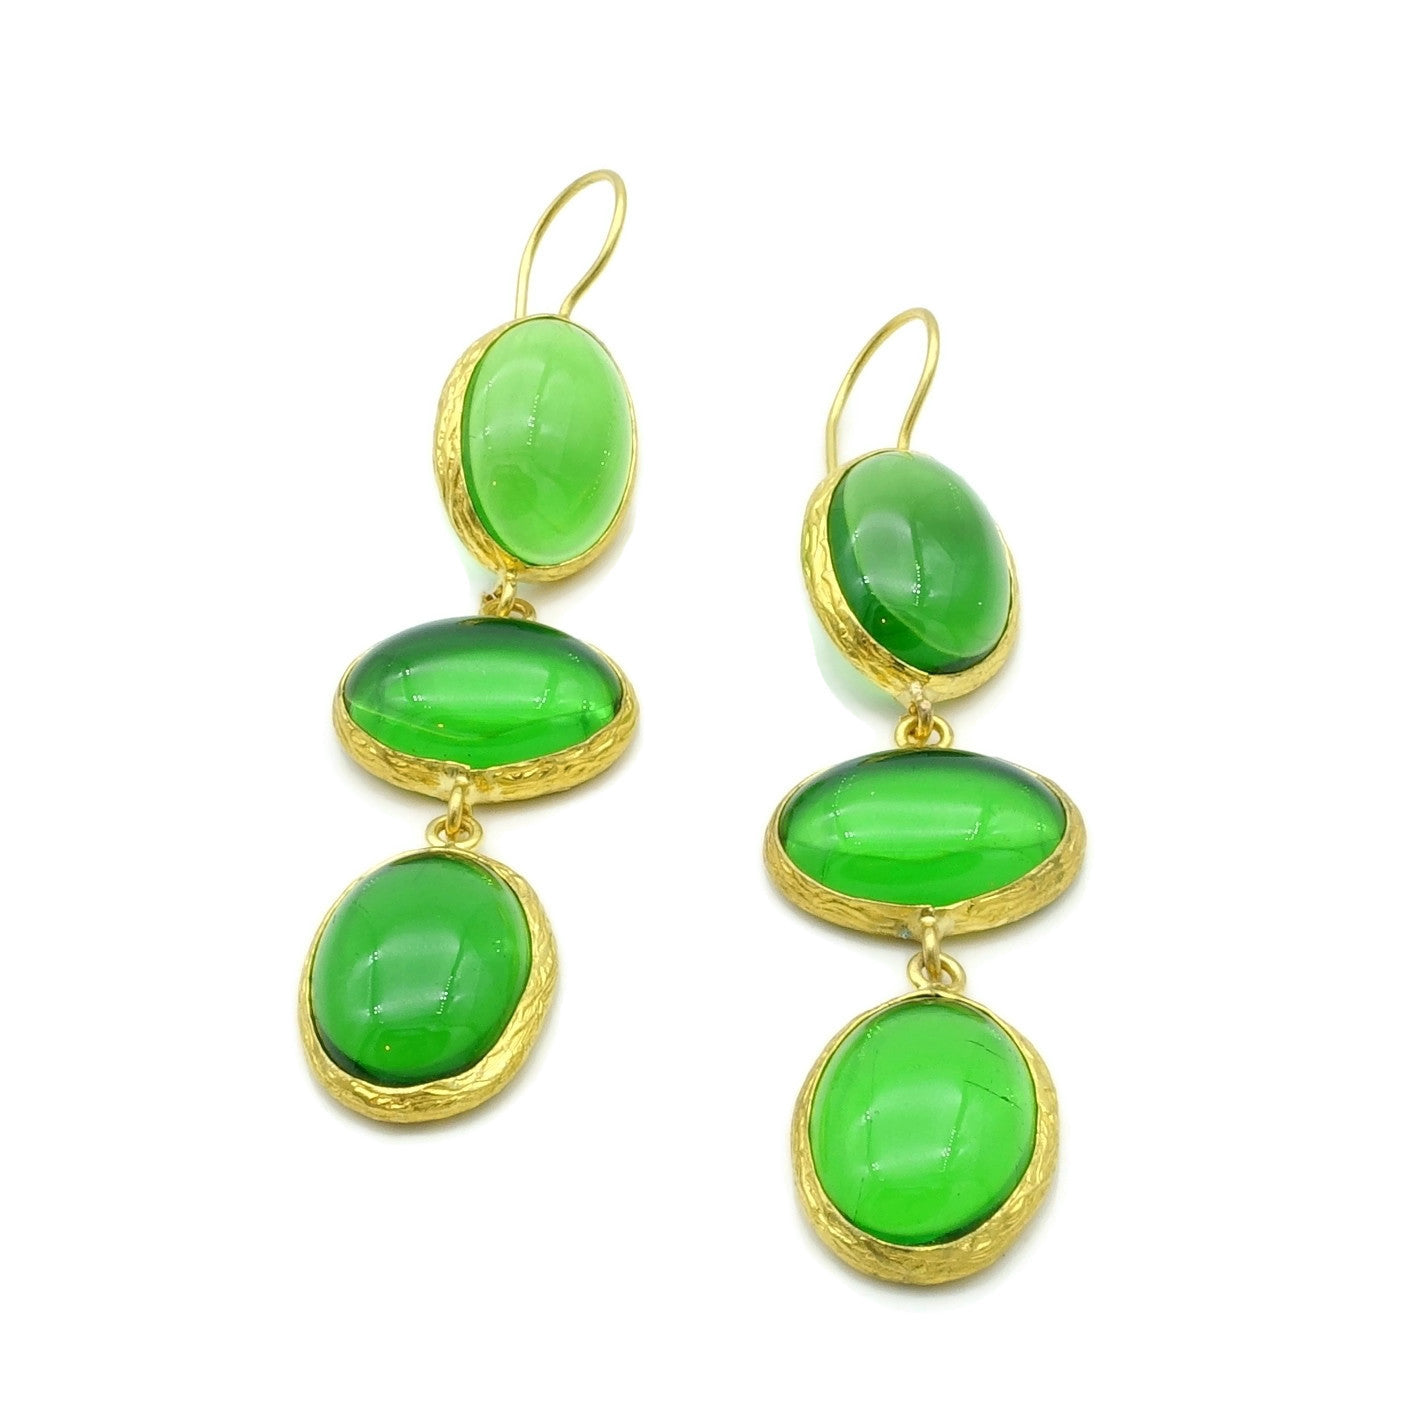 Aylas handmade semi precious gemstone earrings - 21ct Gold plated Ottoman style